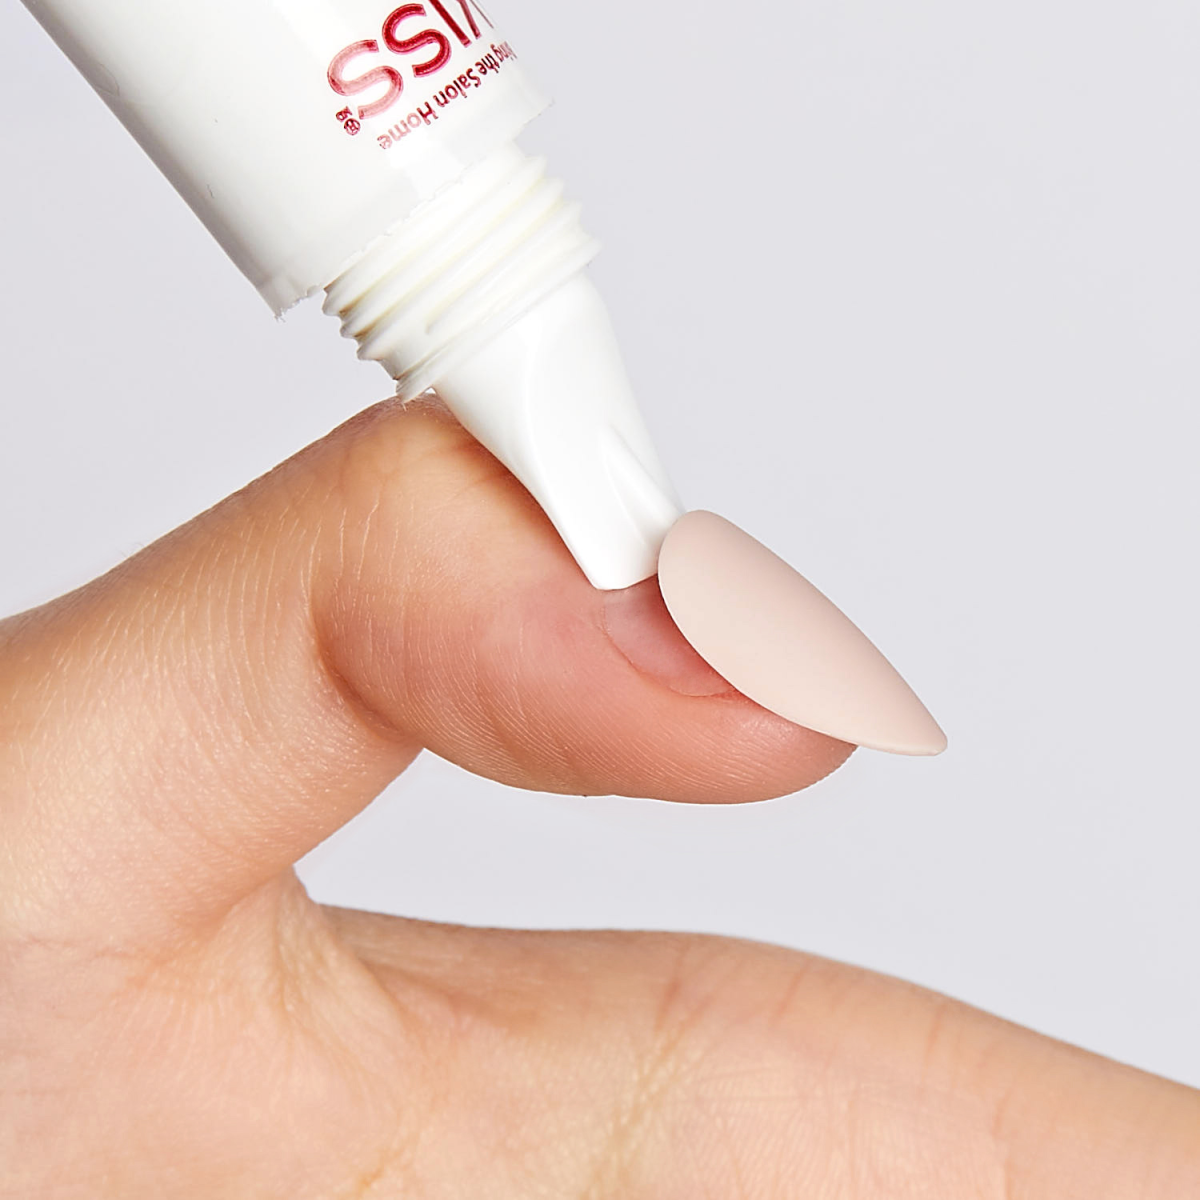 Kiss Glue Off False Nail Remover, Instant - 13.5 ml